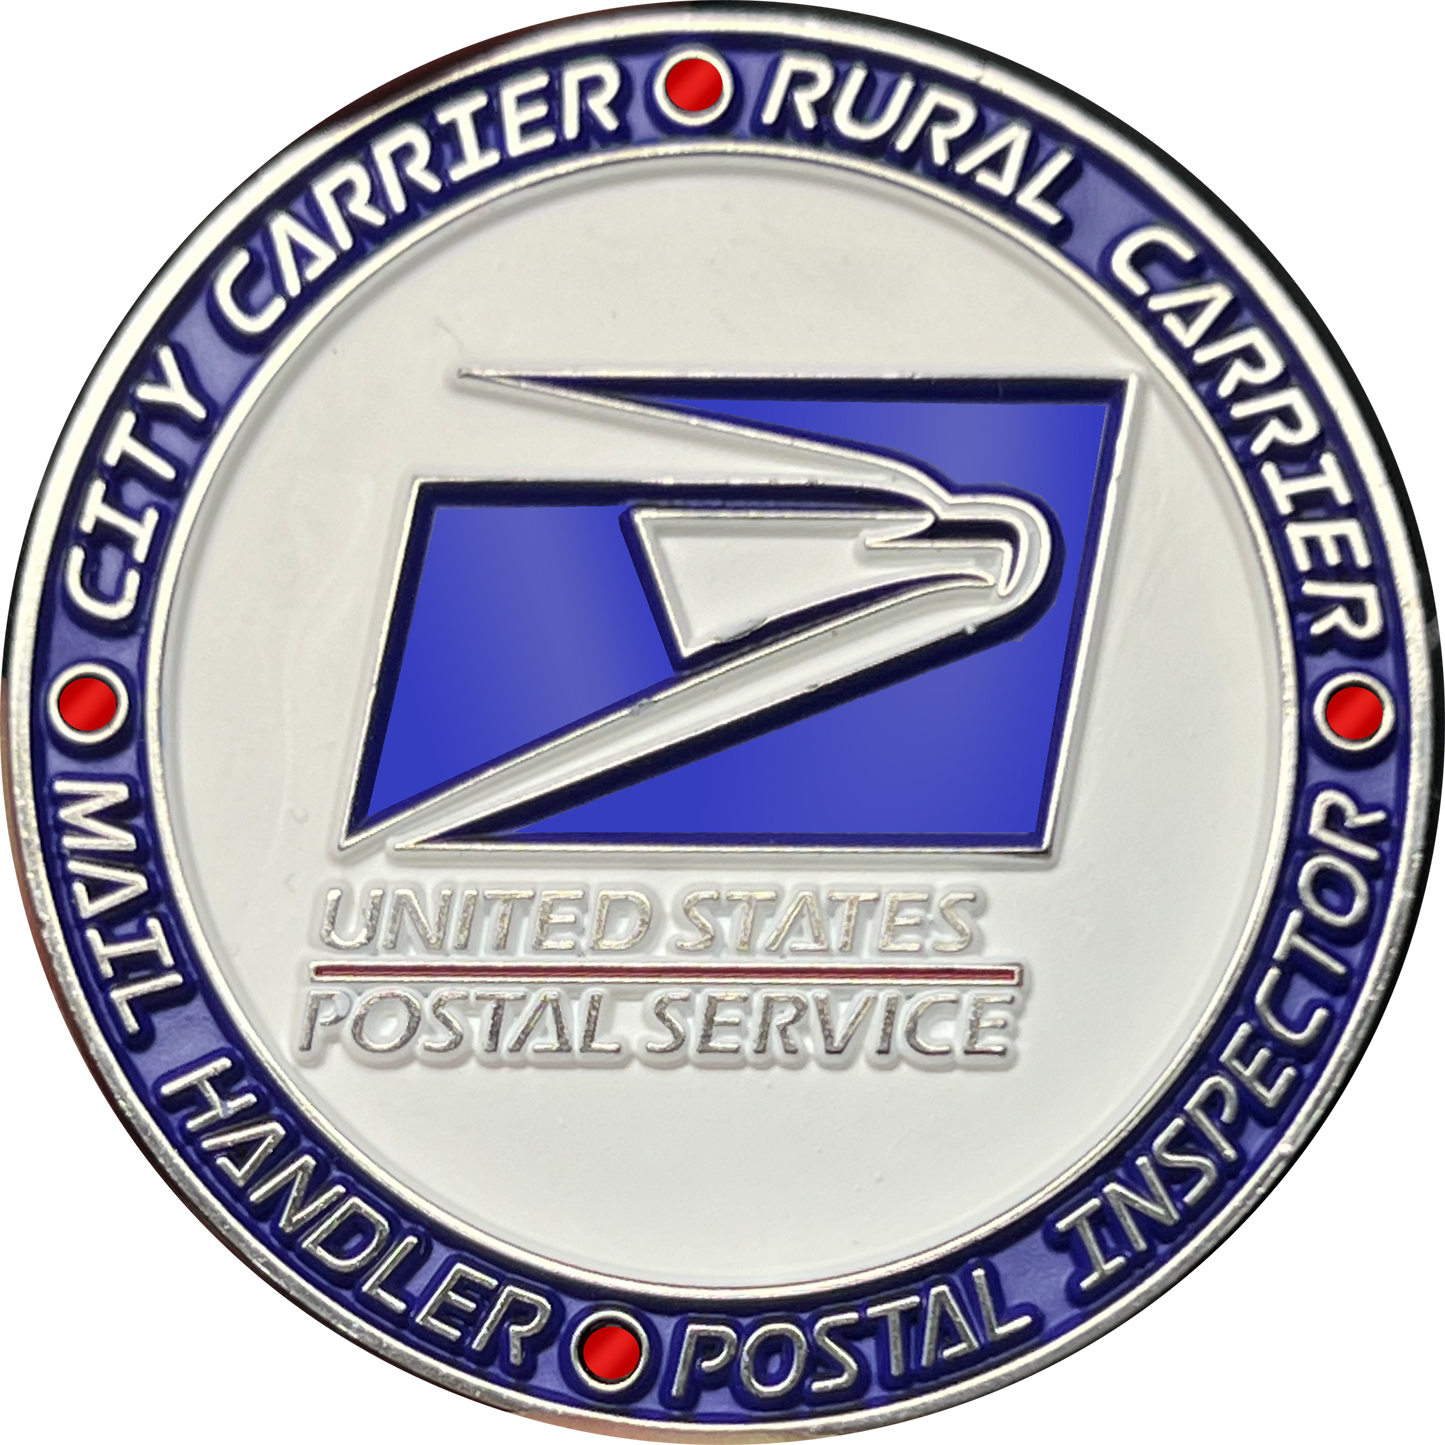 BL2-008B Trim Your Bush Challenge Coin US Postal Carrier Mail Handler Inspector Mailman